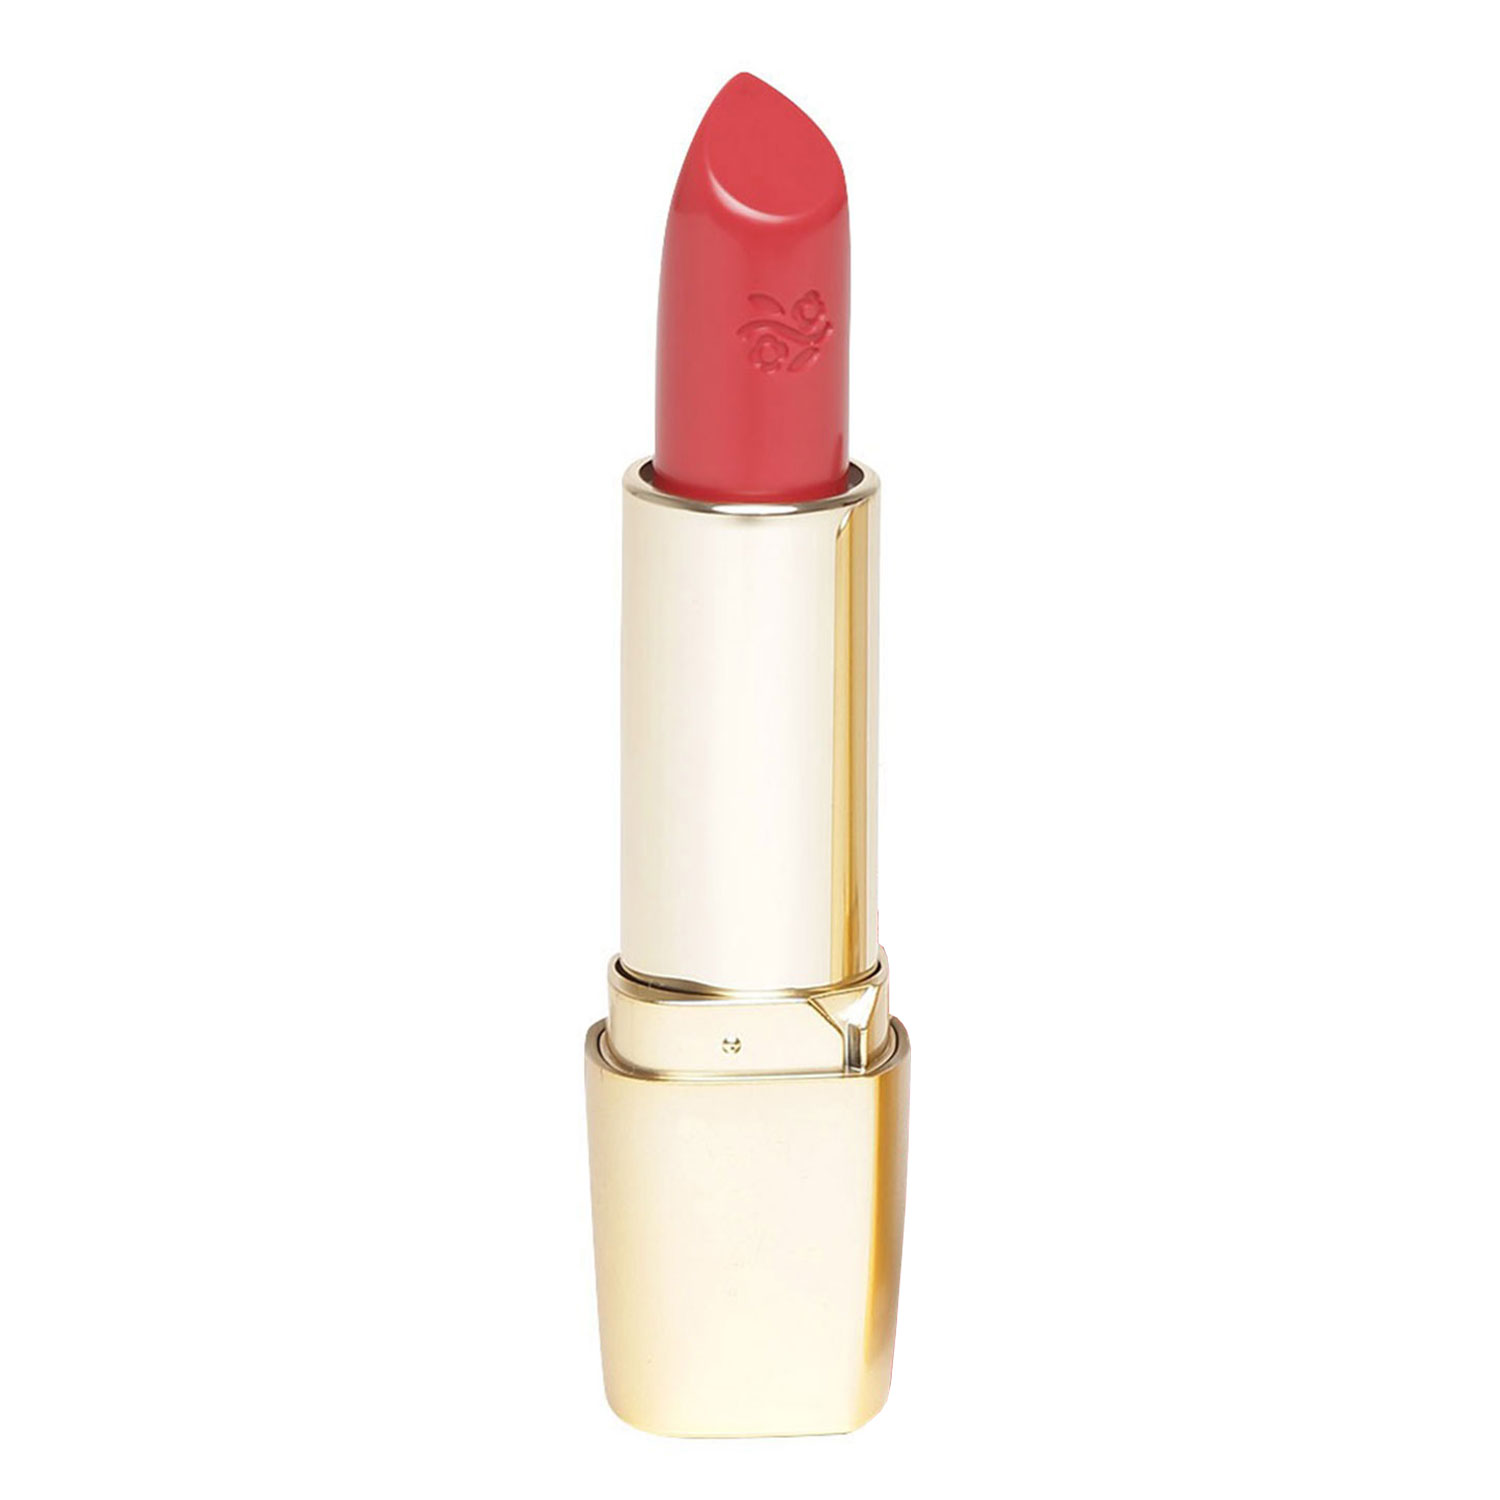 Deborah Milano Milano Red Lipstick, 4.4gm-33 Bright Red